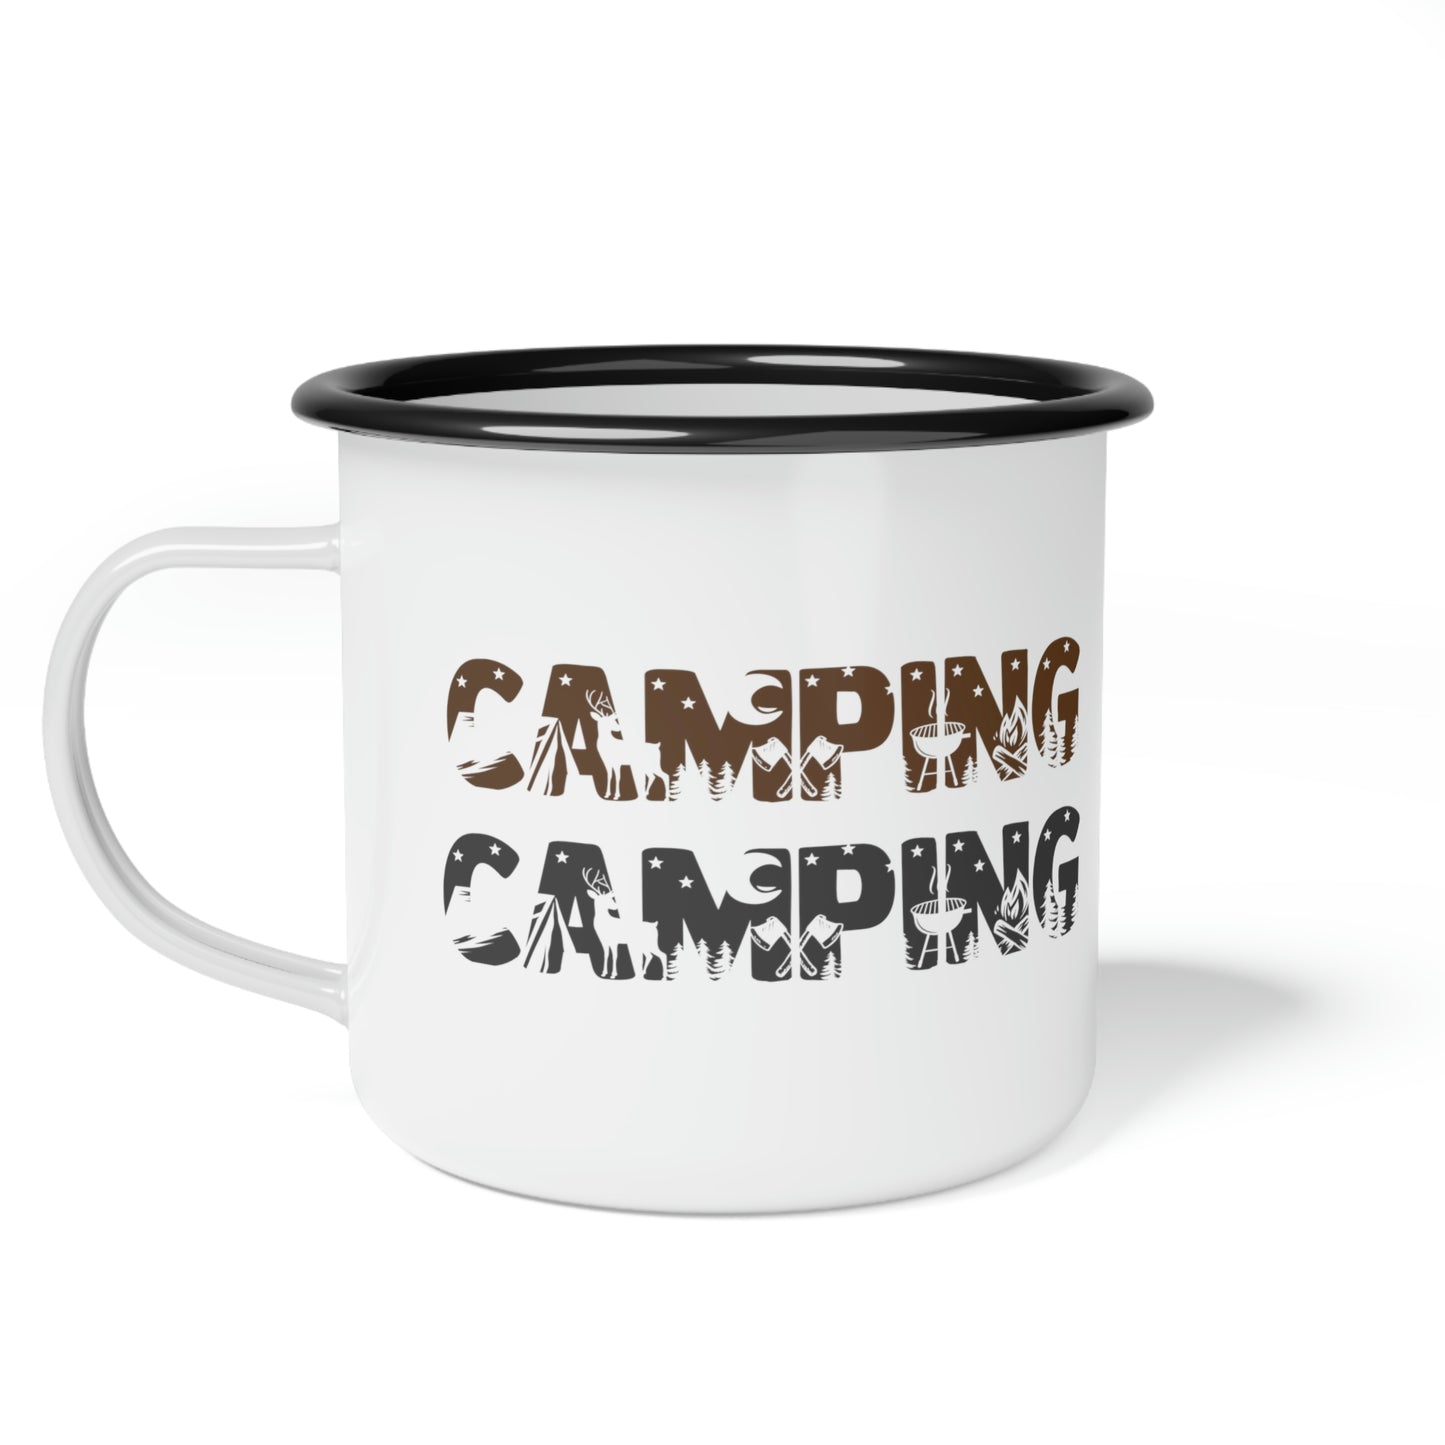 Metal Camp Mug, Custom Camp Mug, Personalized Camping Mug With Your Design or Logo, Vintage Coffee Cup, cozy cabin mugs